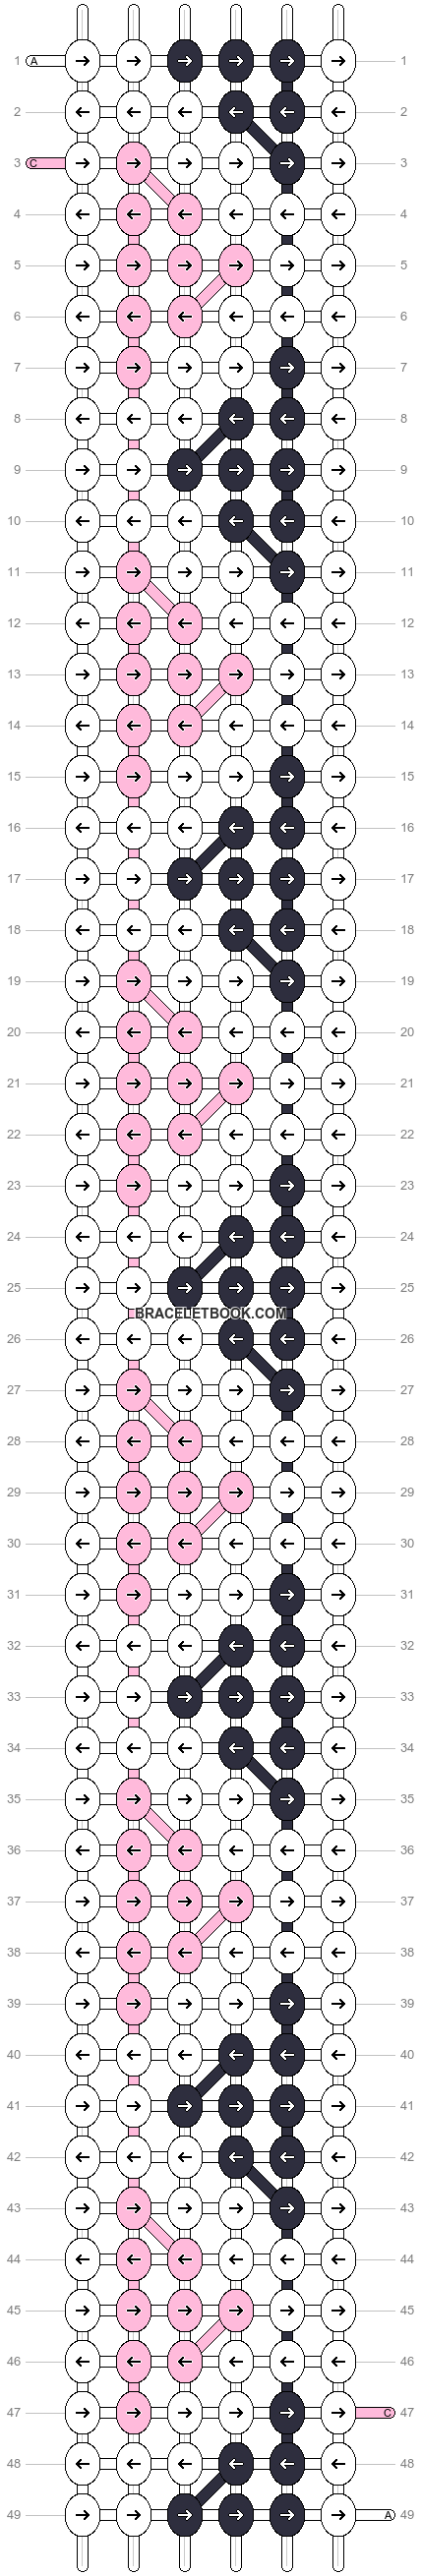 Alpha pattern #17842 pattern